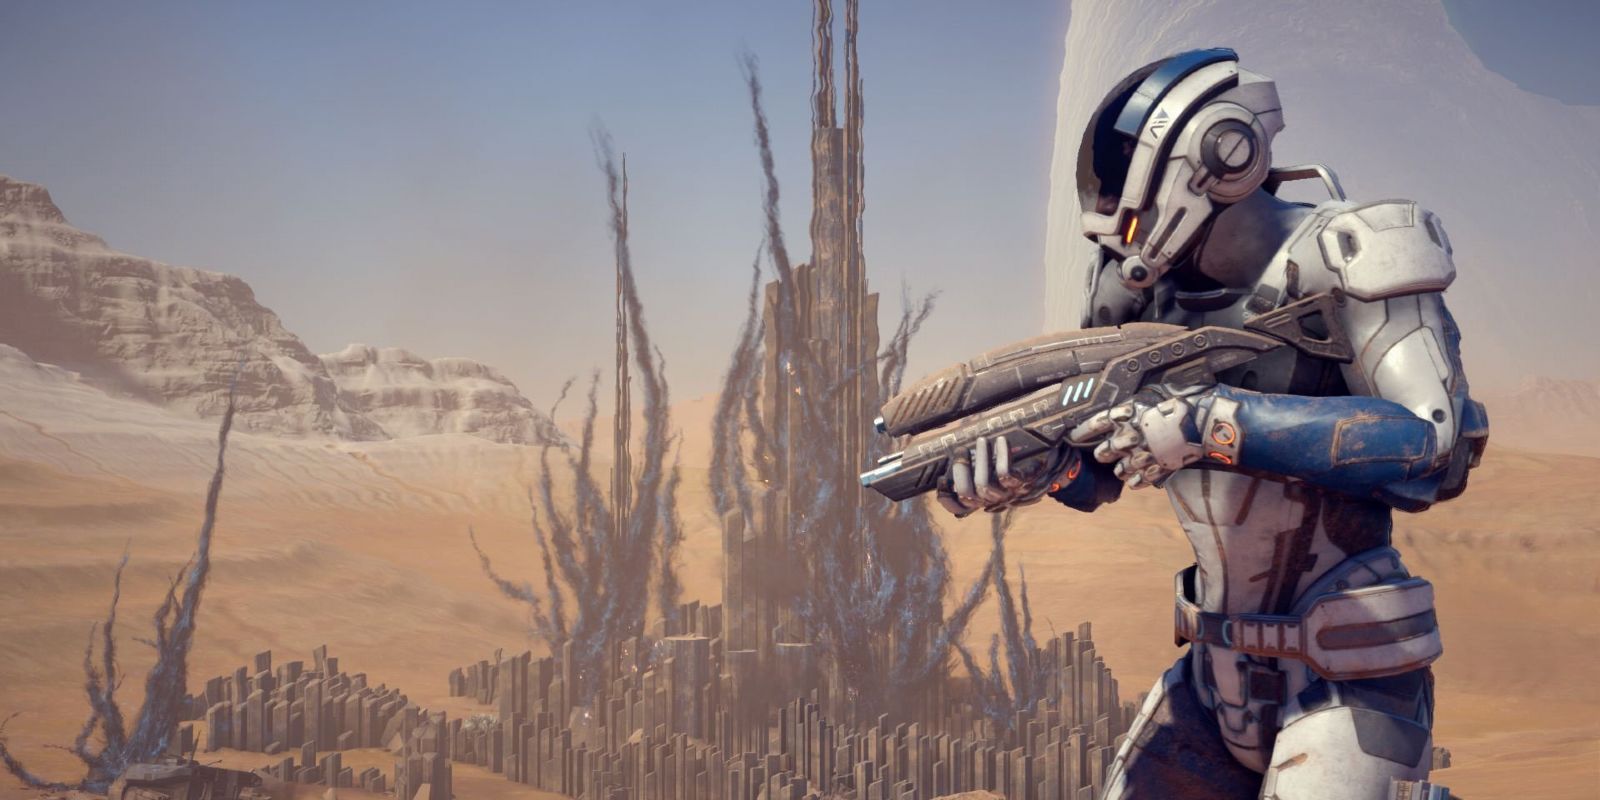 Pathfinder Ryder standing in the desert in Mass Effect Andromeda